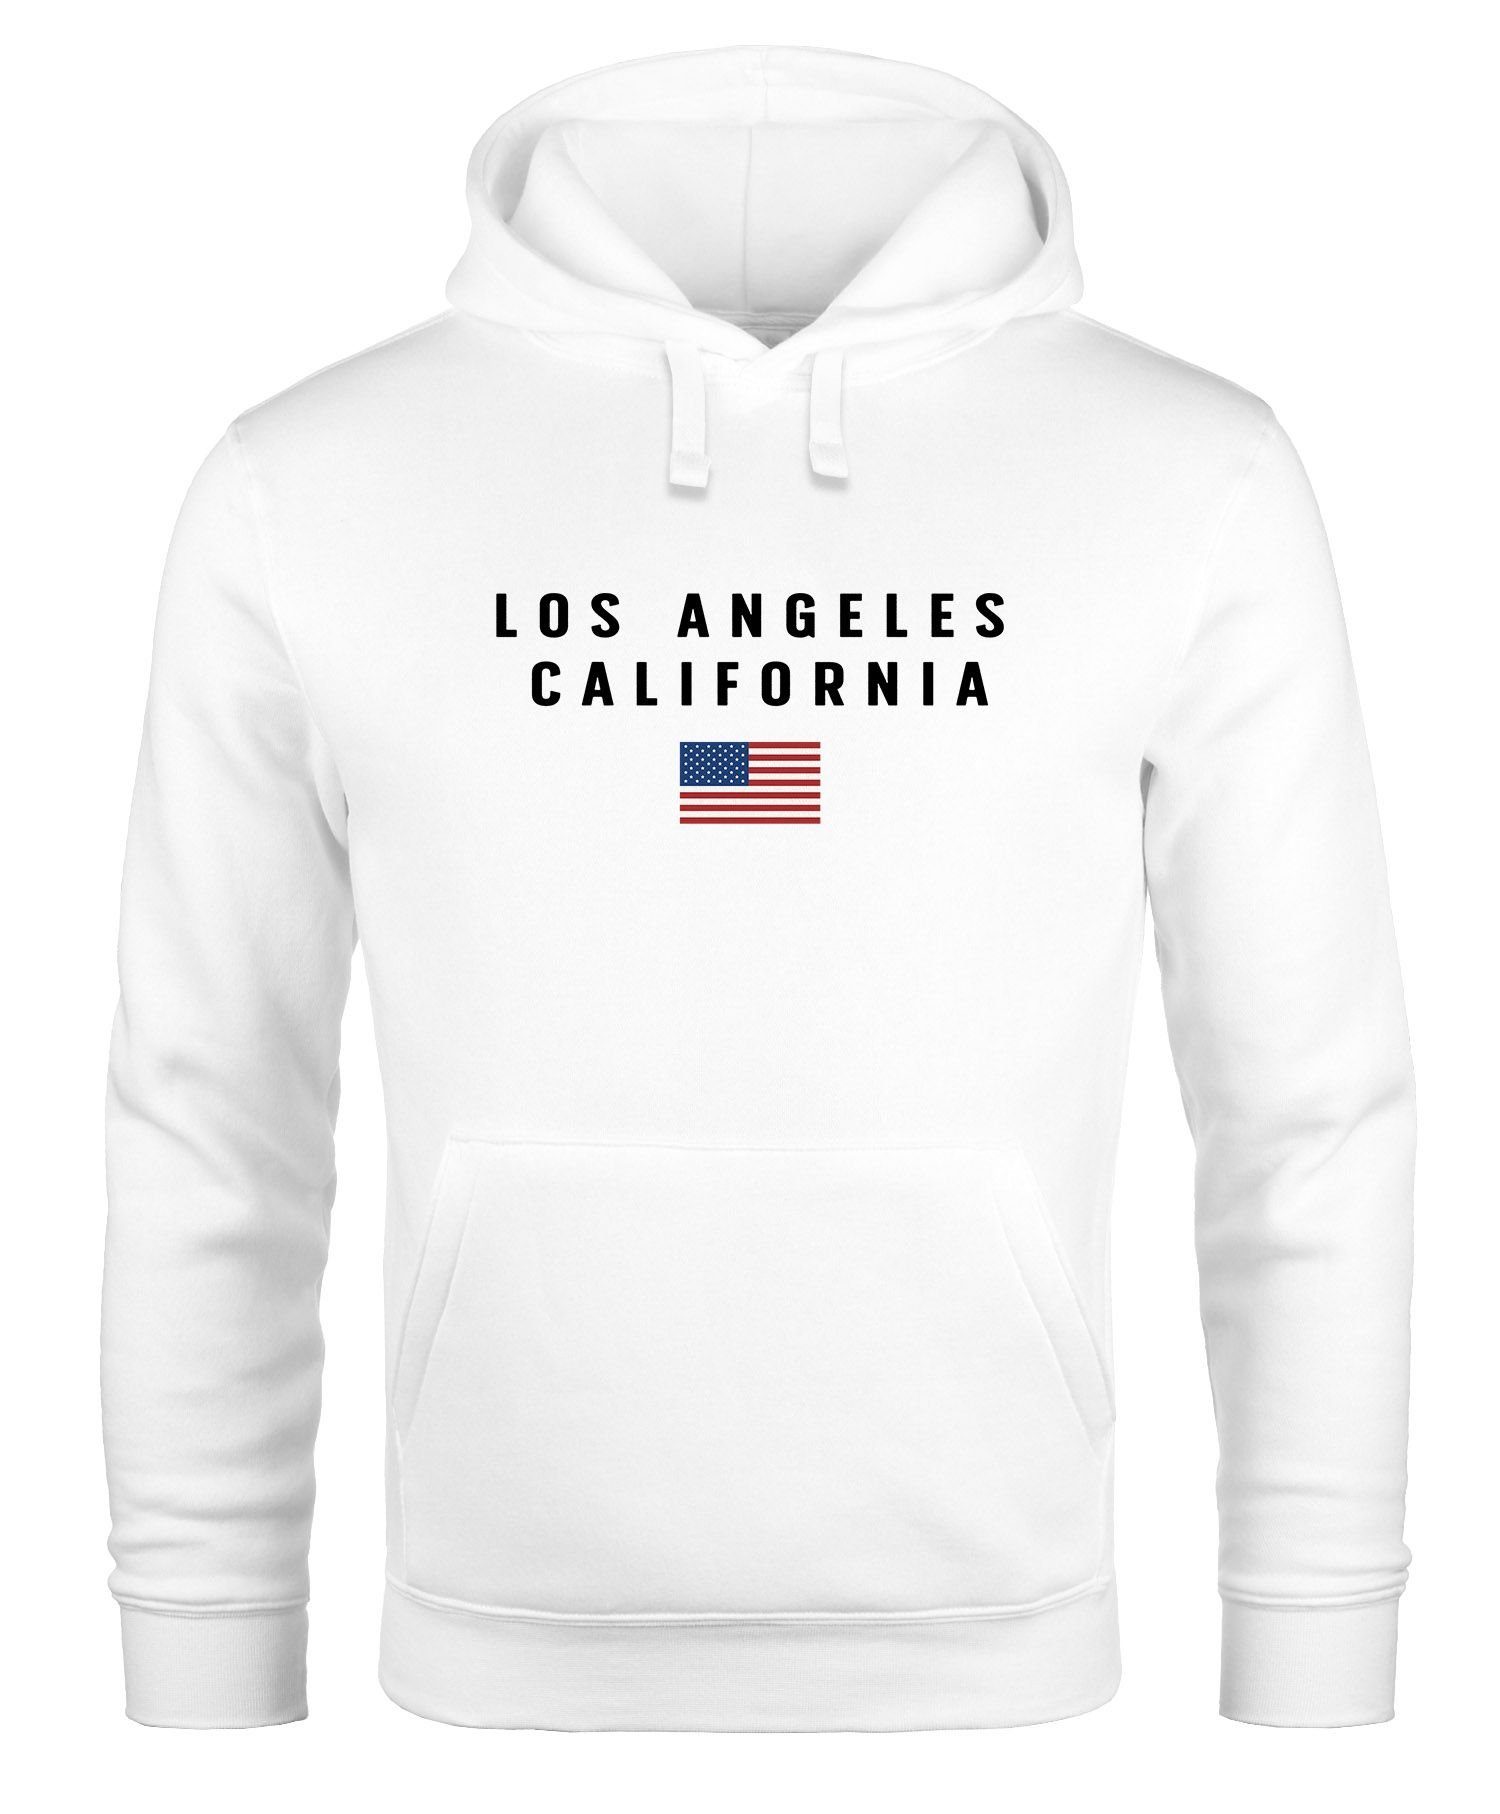 Neverless Hoodie Hoodie Herren Bedruckt Schriftzug California Los Angeles USA Amerika Flagge Fashion Streetstyle Neverless® weiß